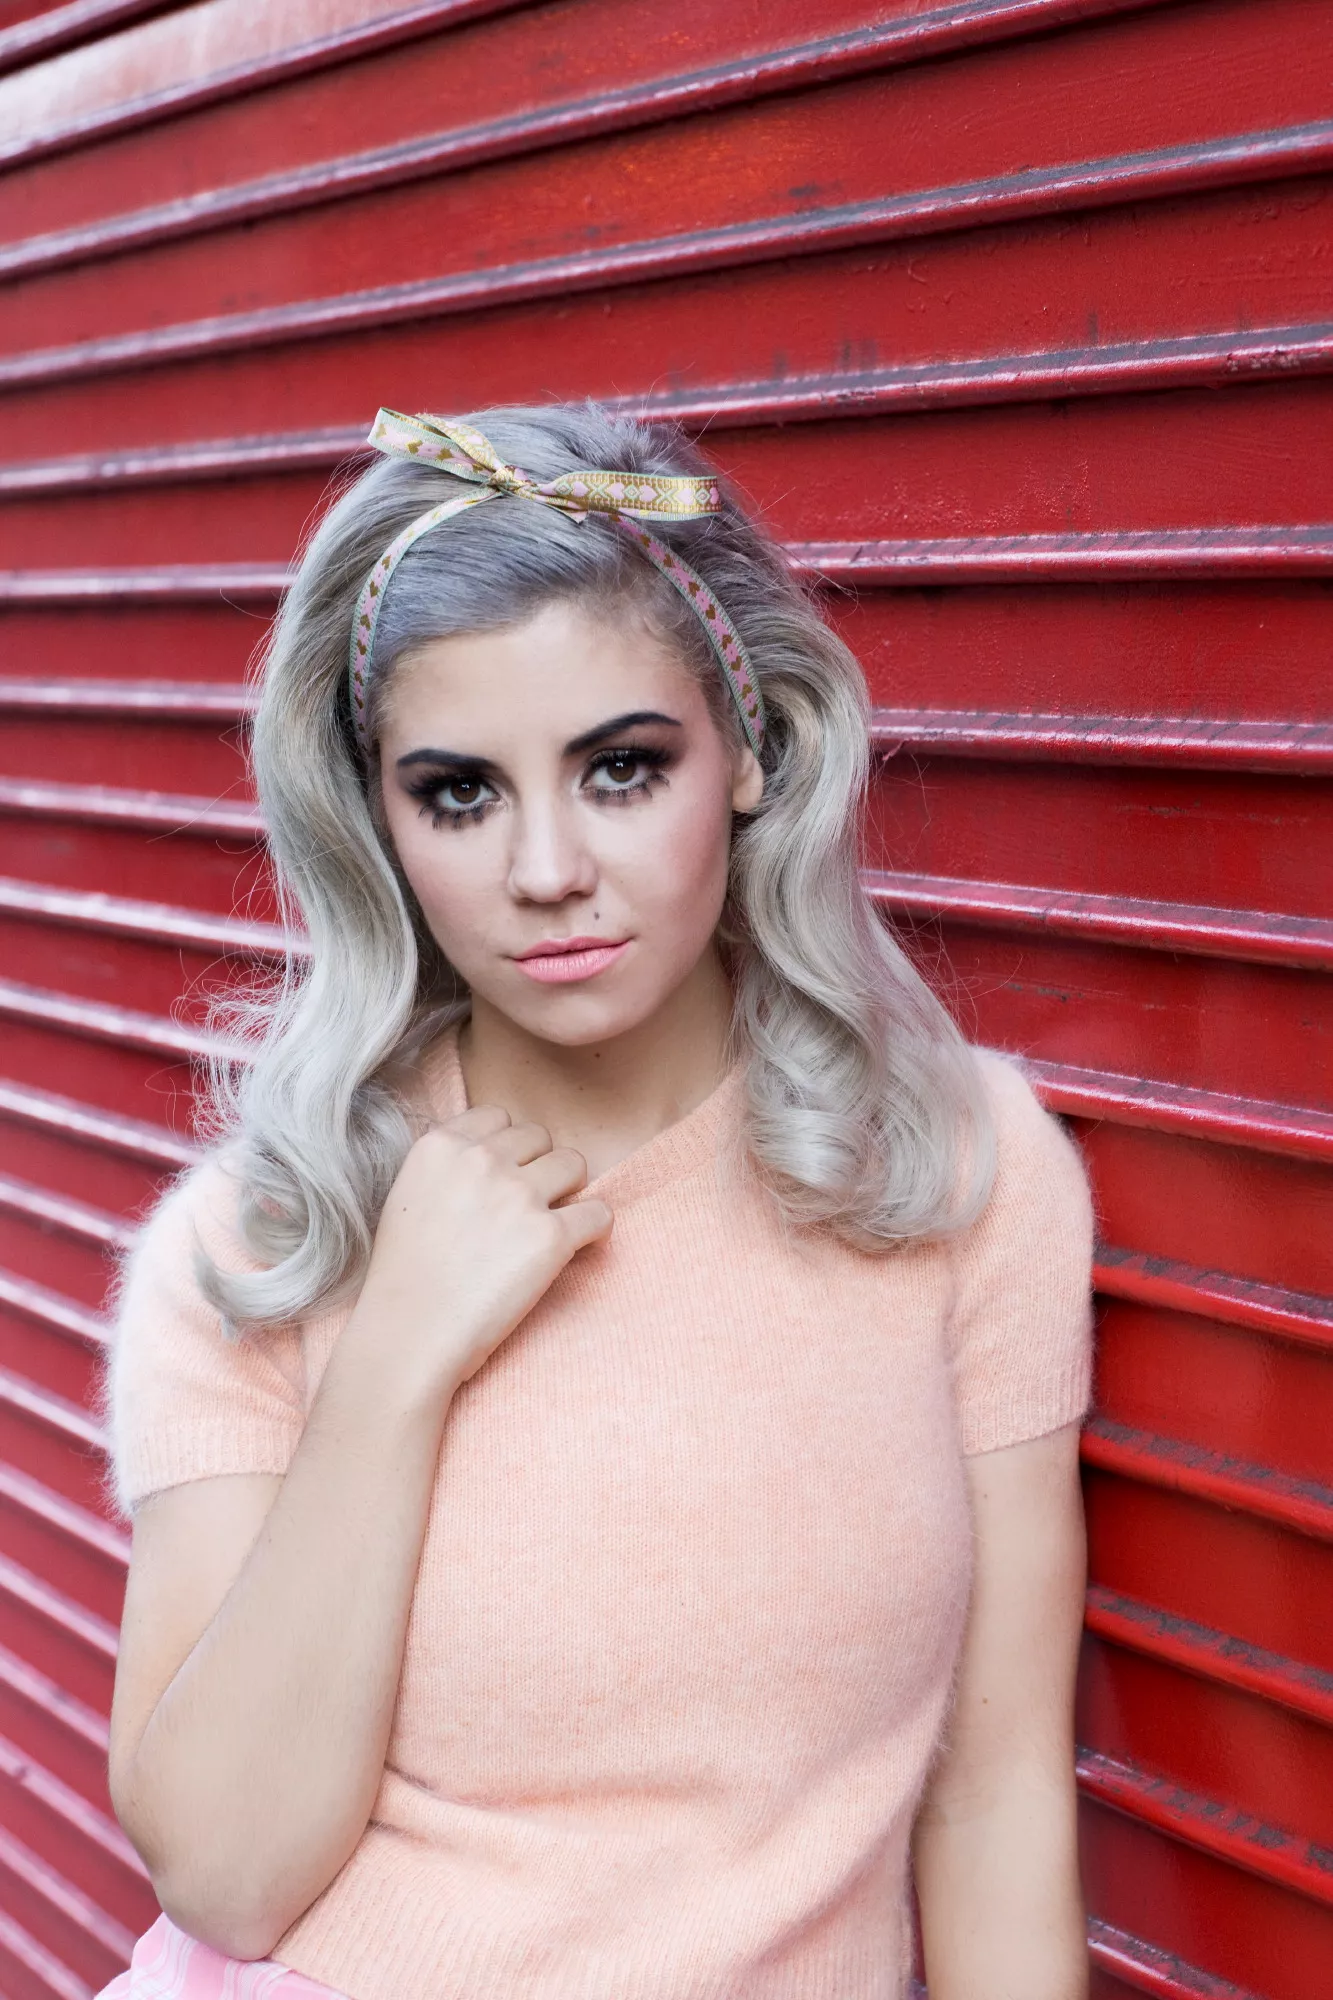 Marina And The Diamonds: I England siger de, jeg er gal